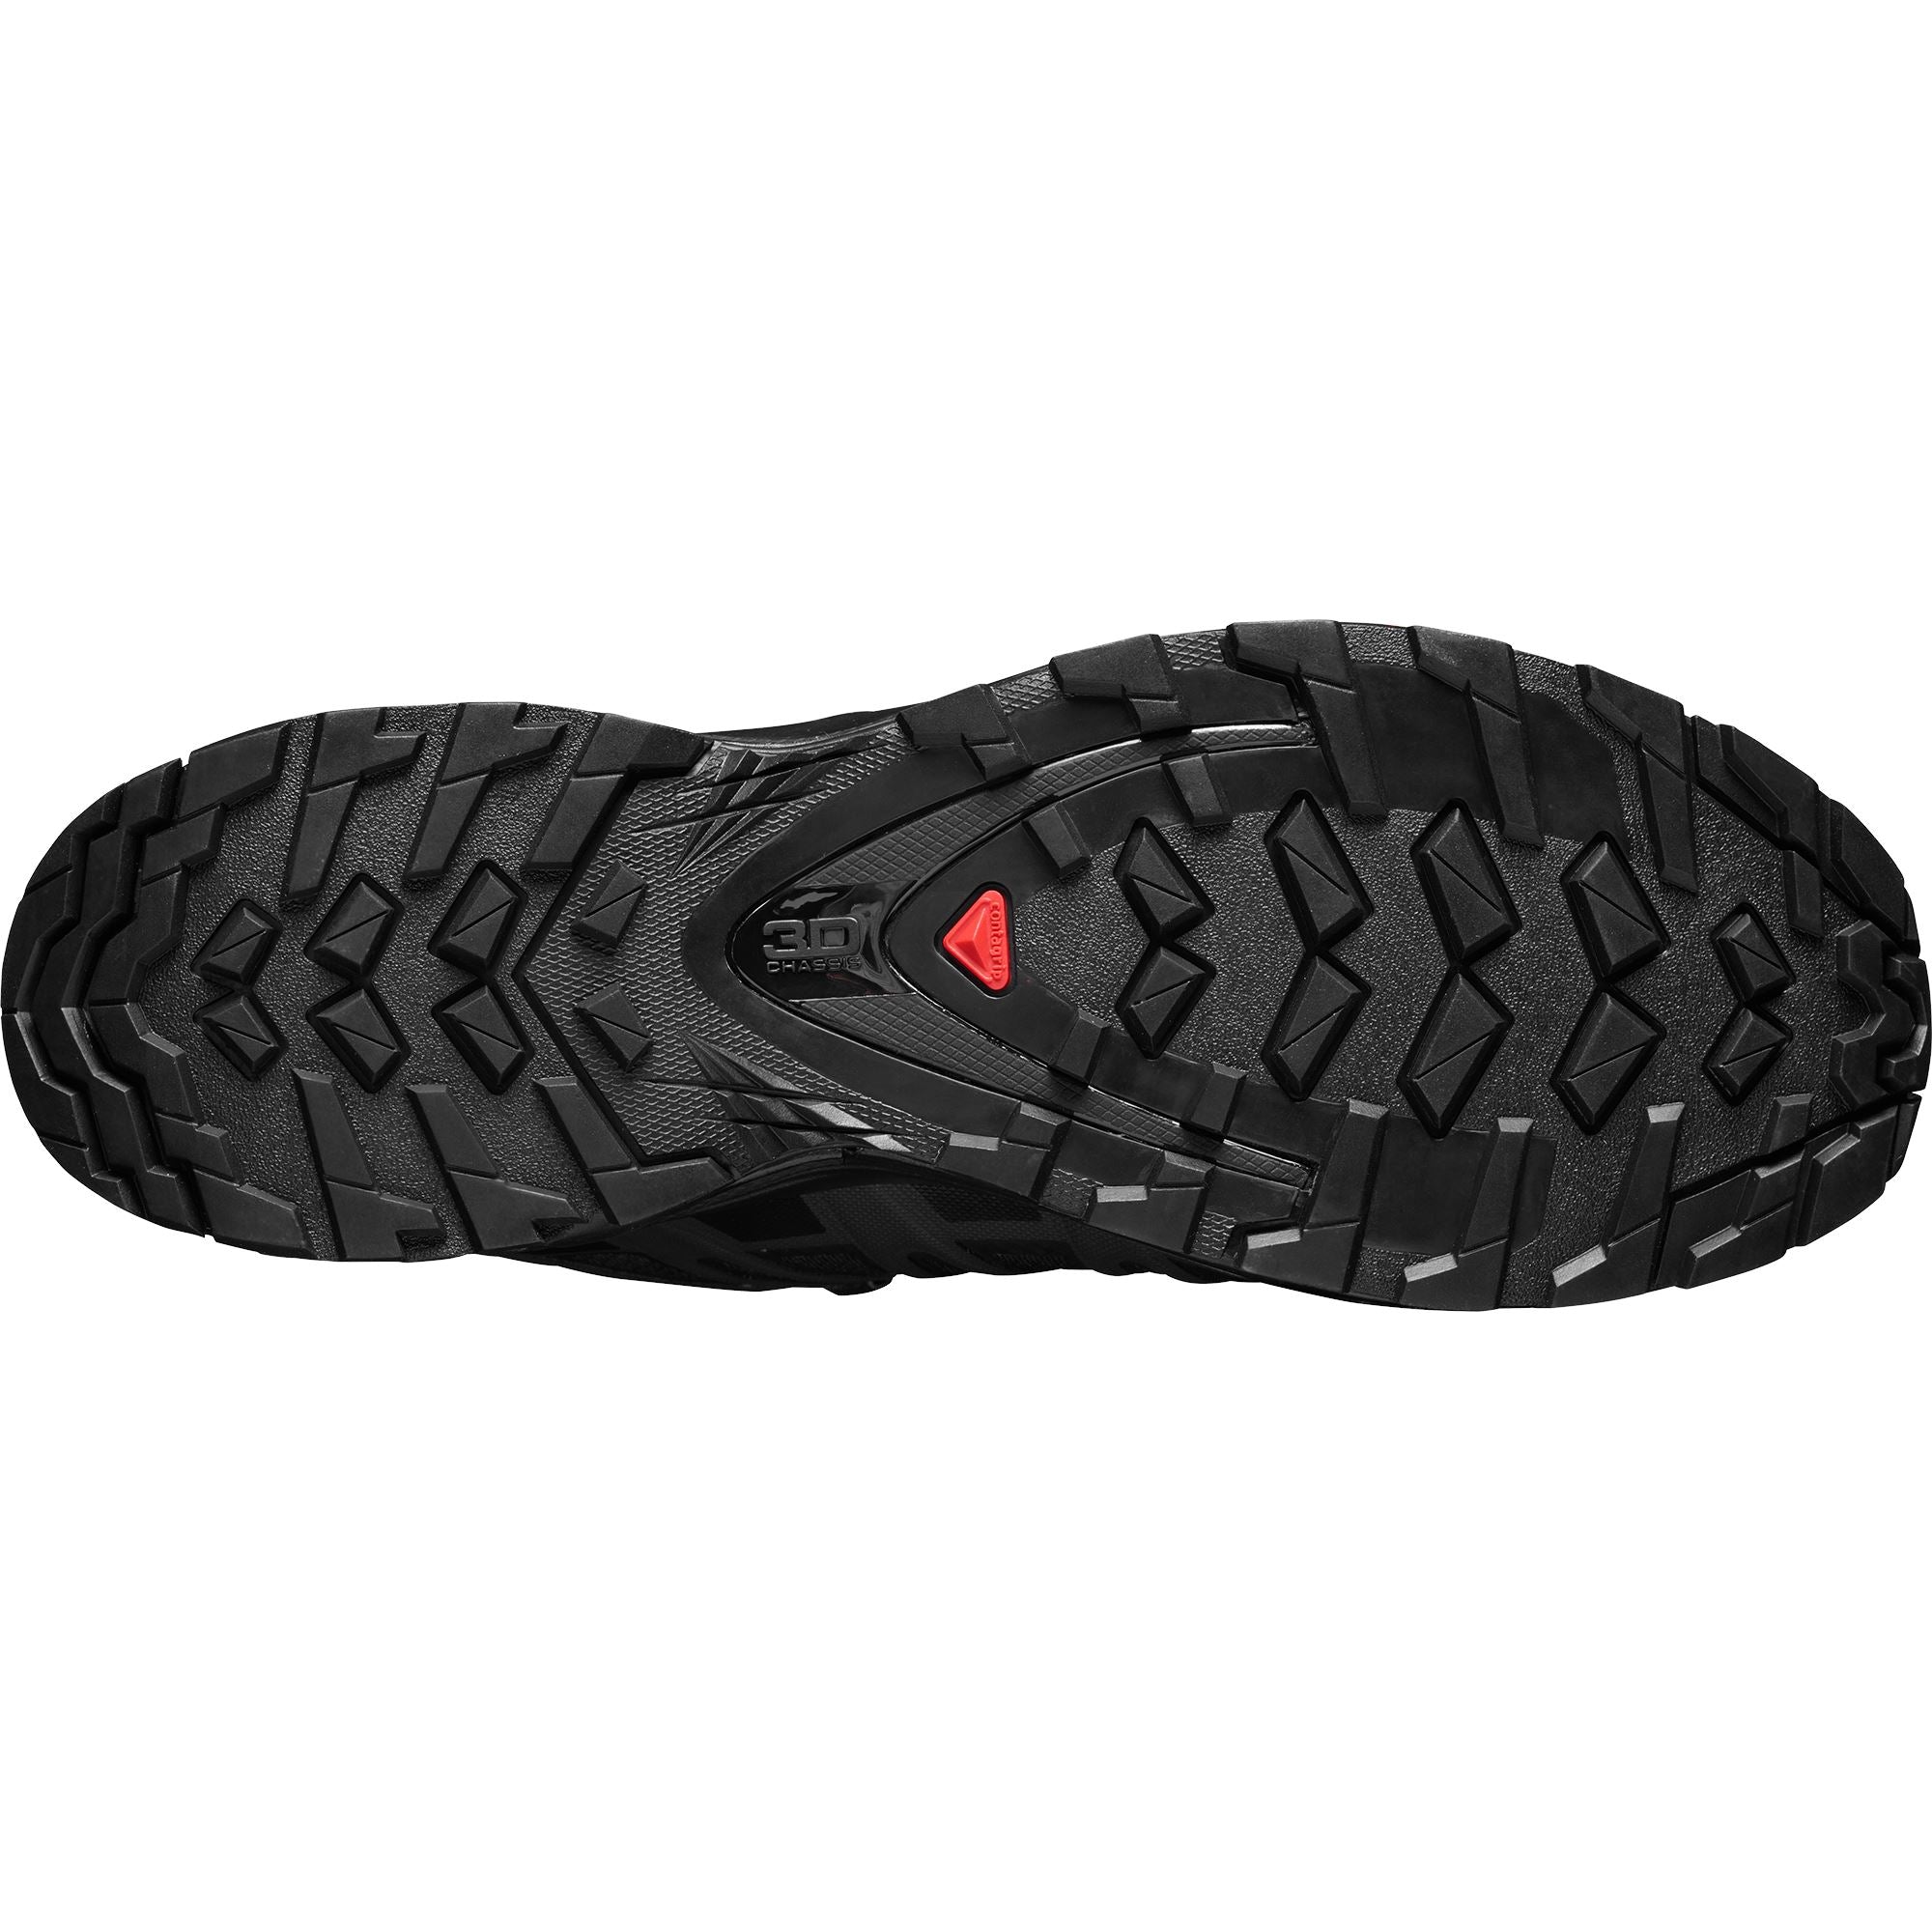 Salomon XA Pro 3D V8 GTX Women's Trail Running Shoes 